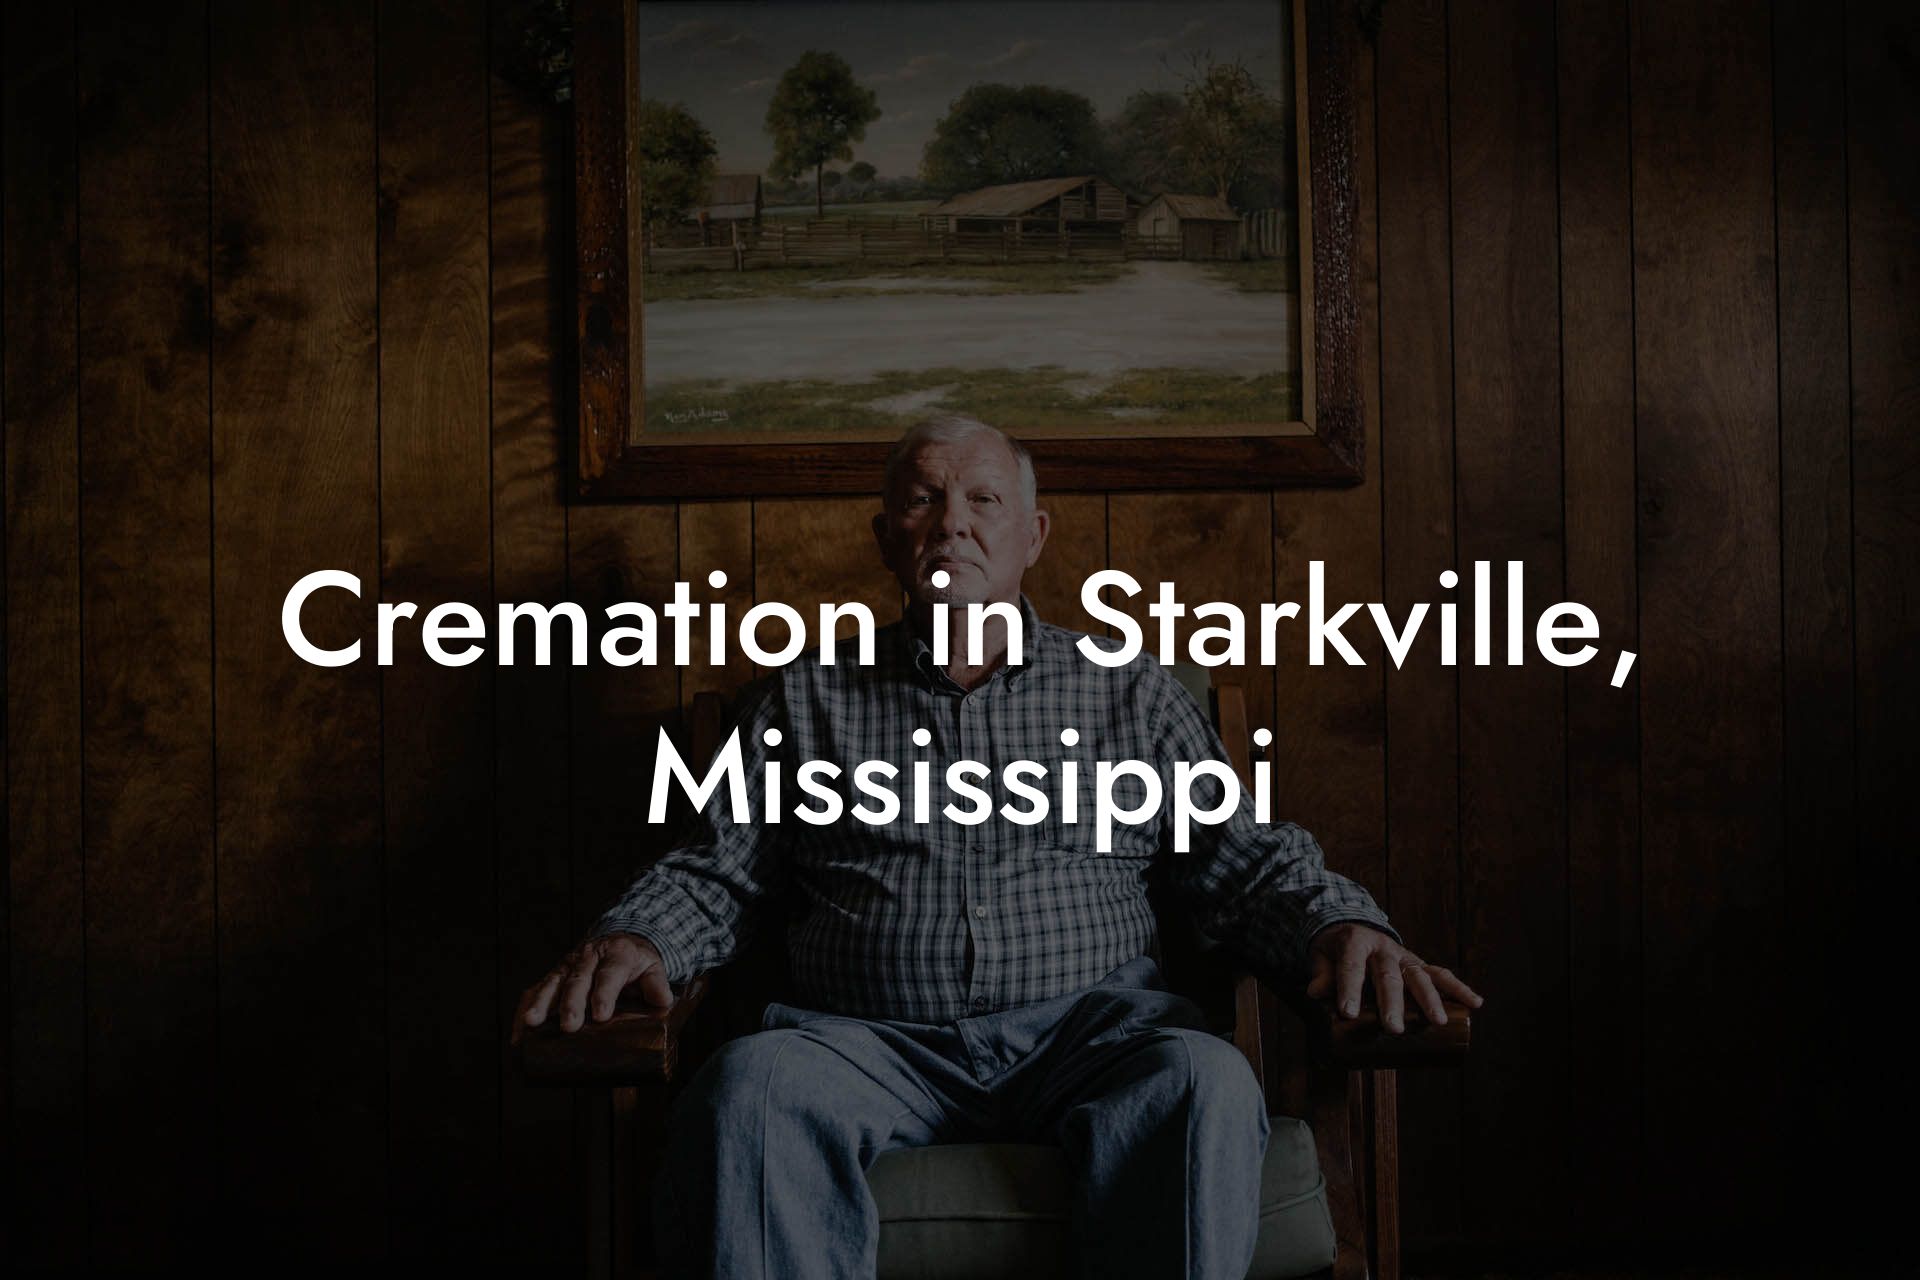 Cremation in Starkville, Mississippi